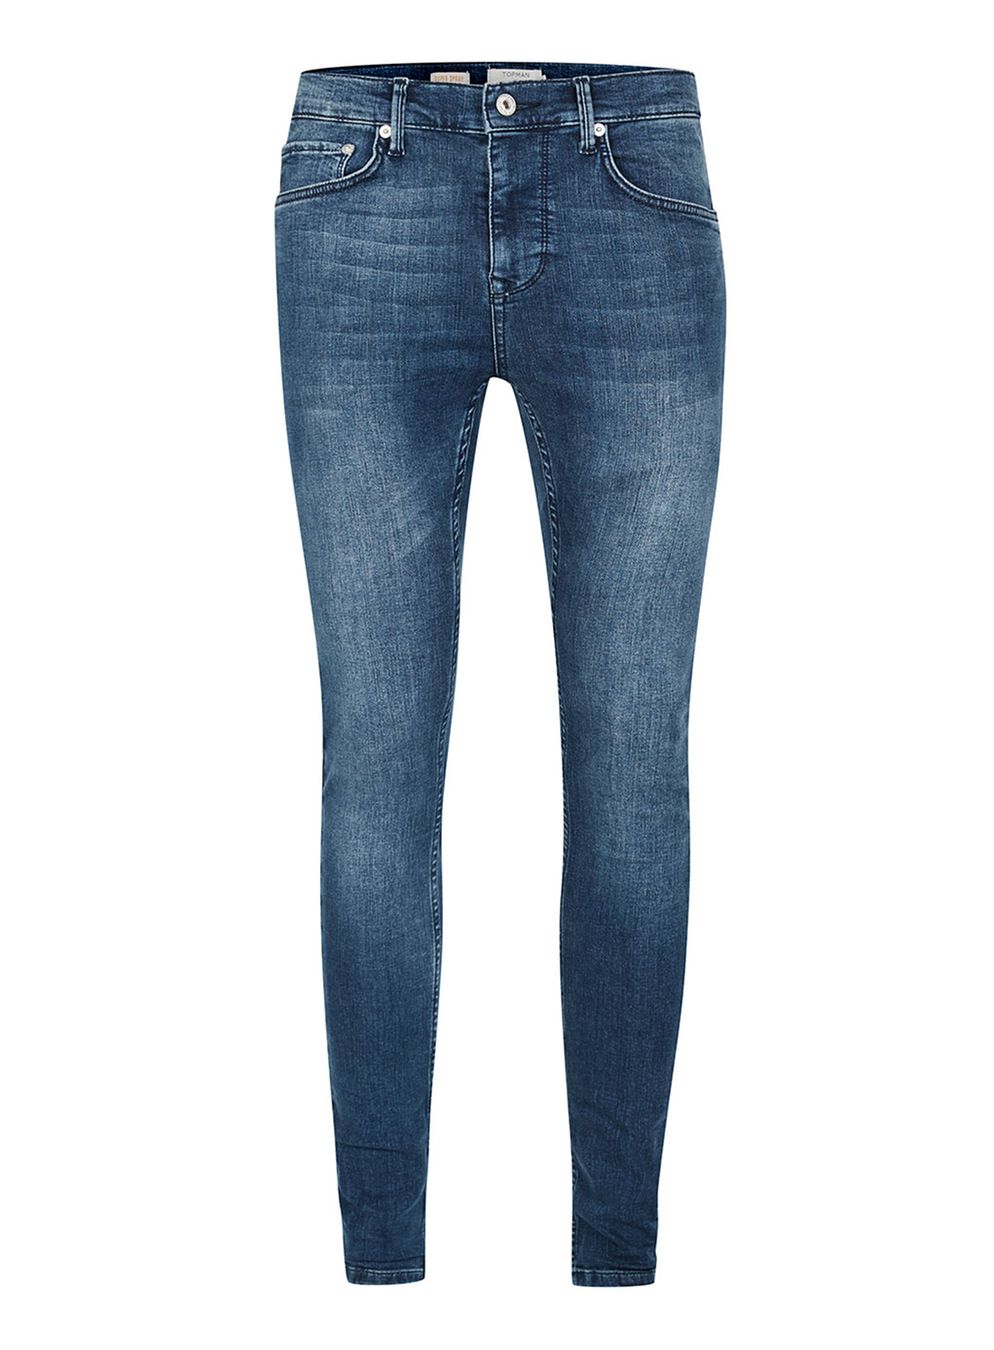 20 Super Spray On Extreme Skinny Jeans For Men Under £50 - THE JEANS BLOG